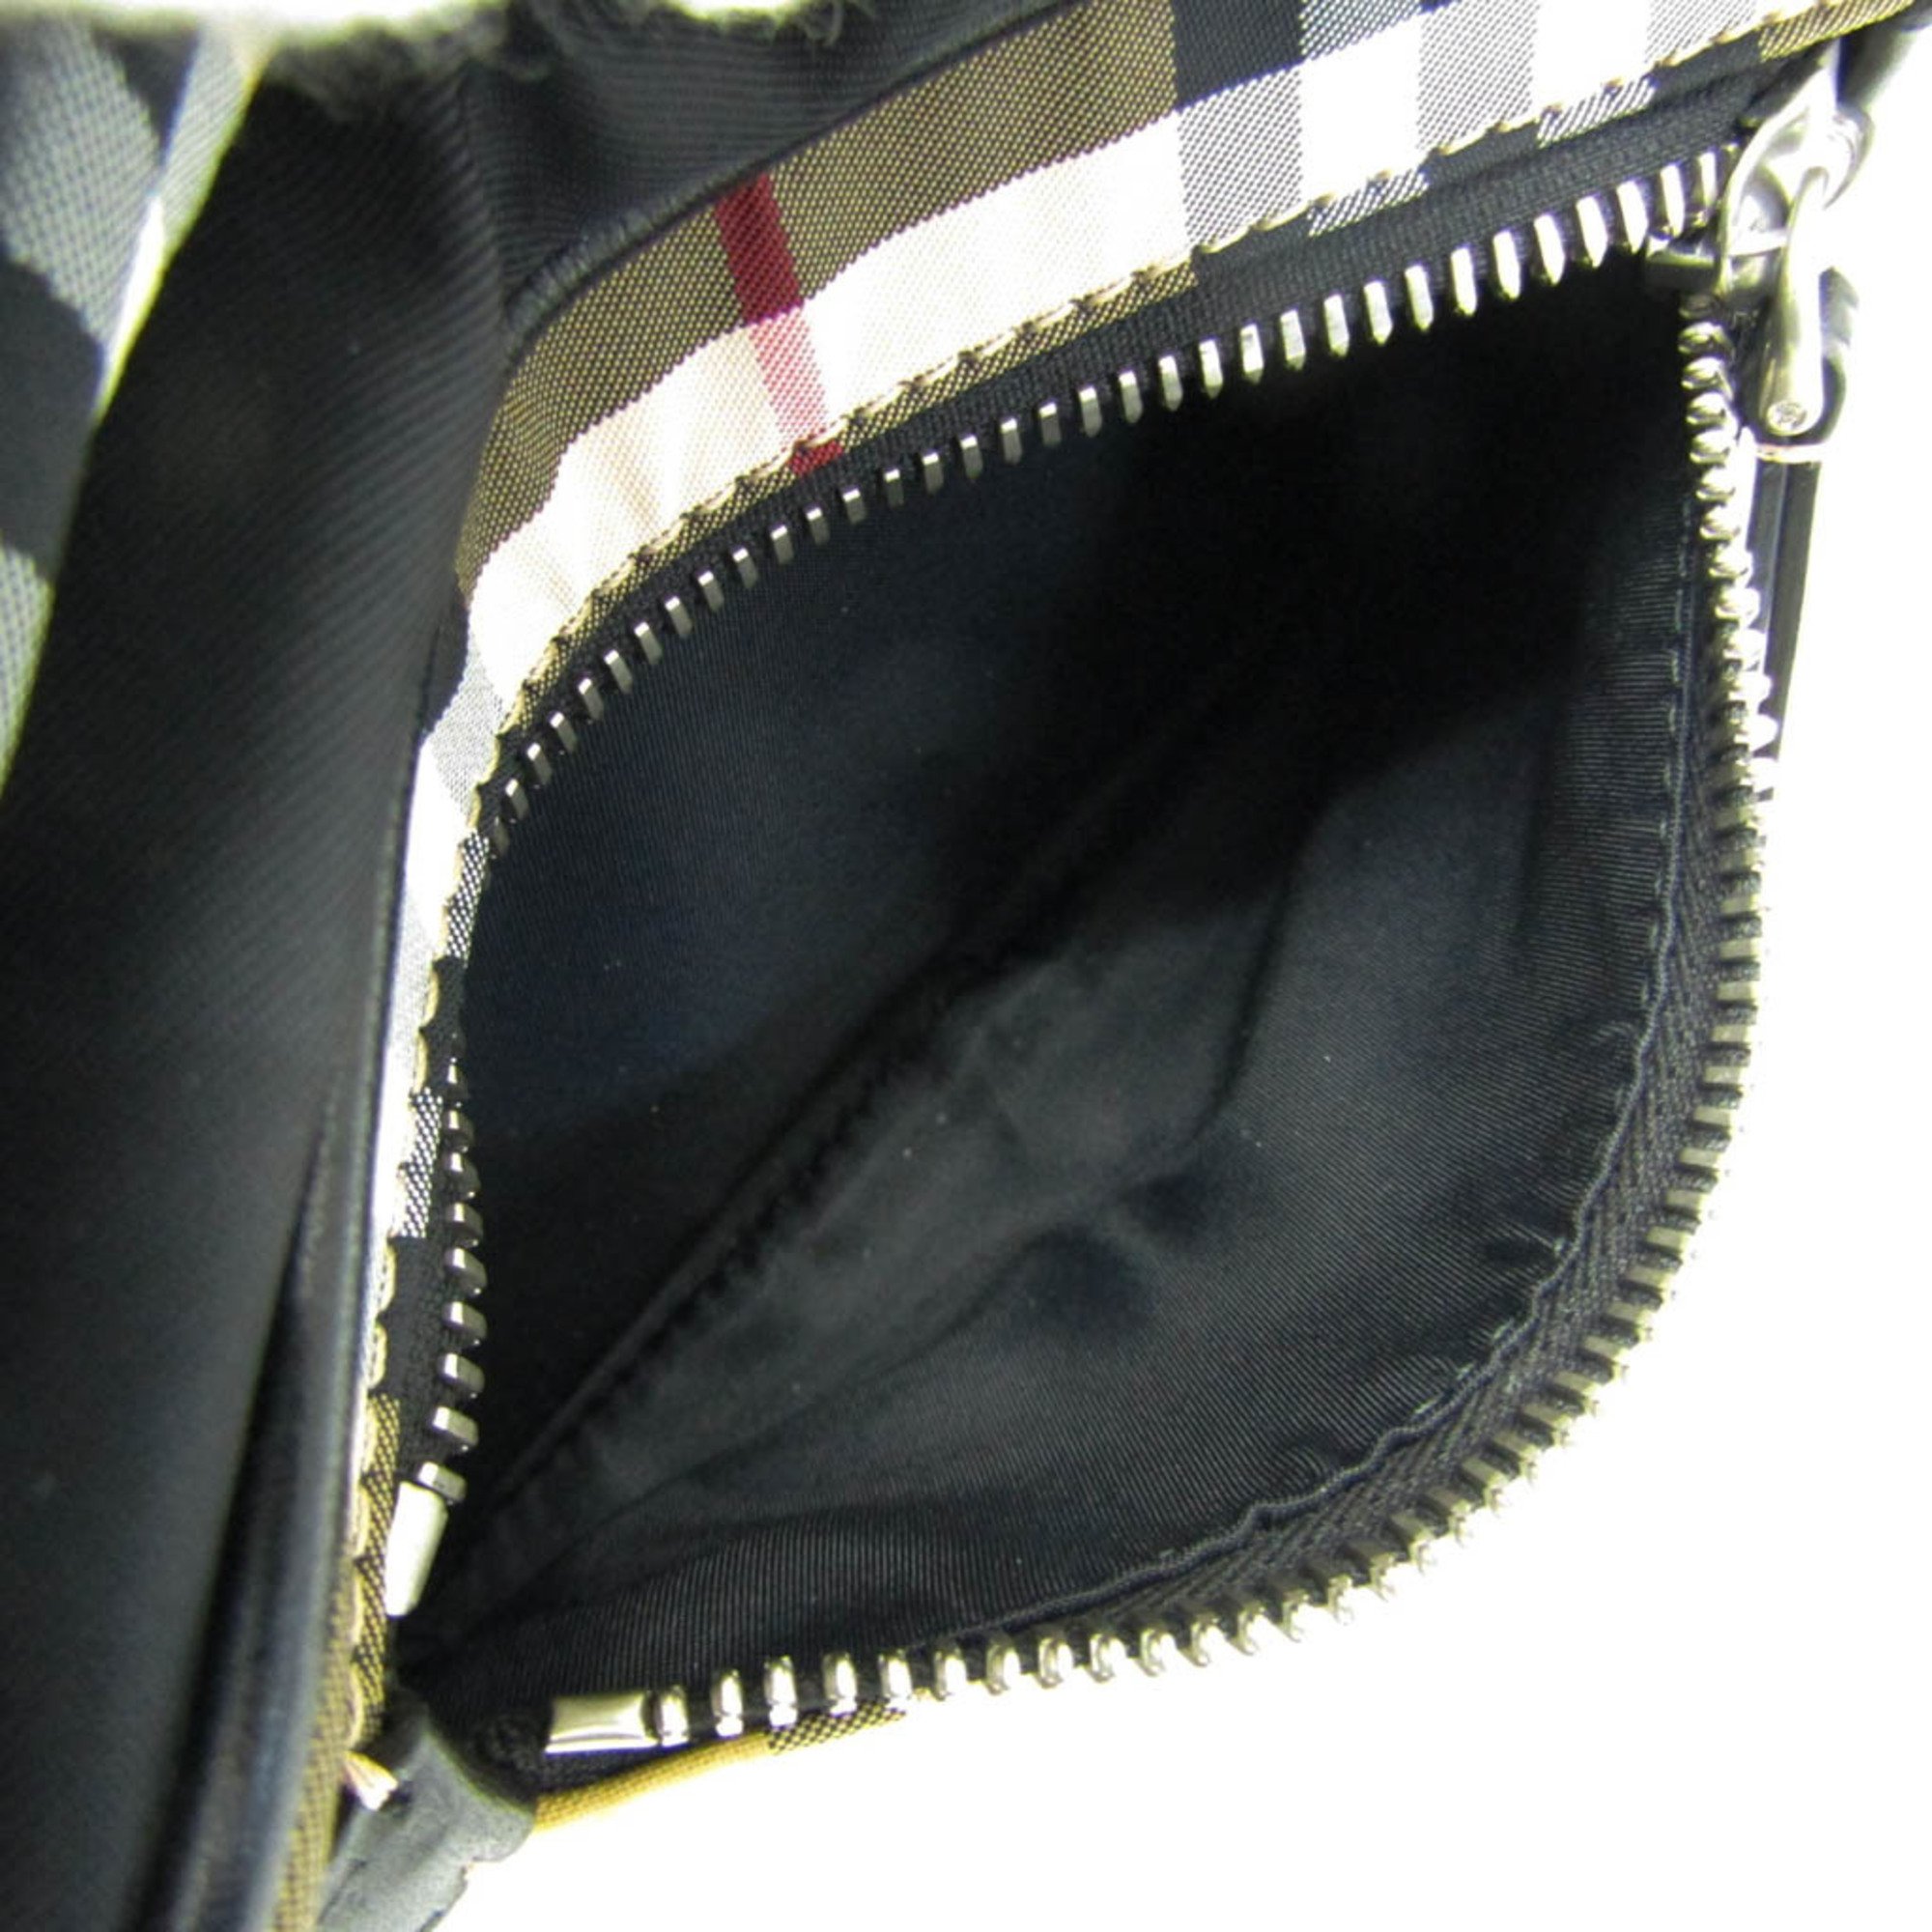 Burberry Novacheck 8005524 Women,Men Leather,Nylon Shoulder Bag Beige,Black,Red Color